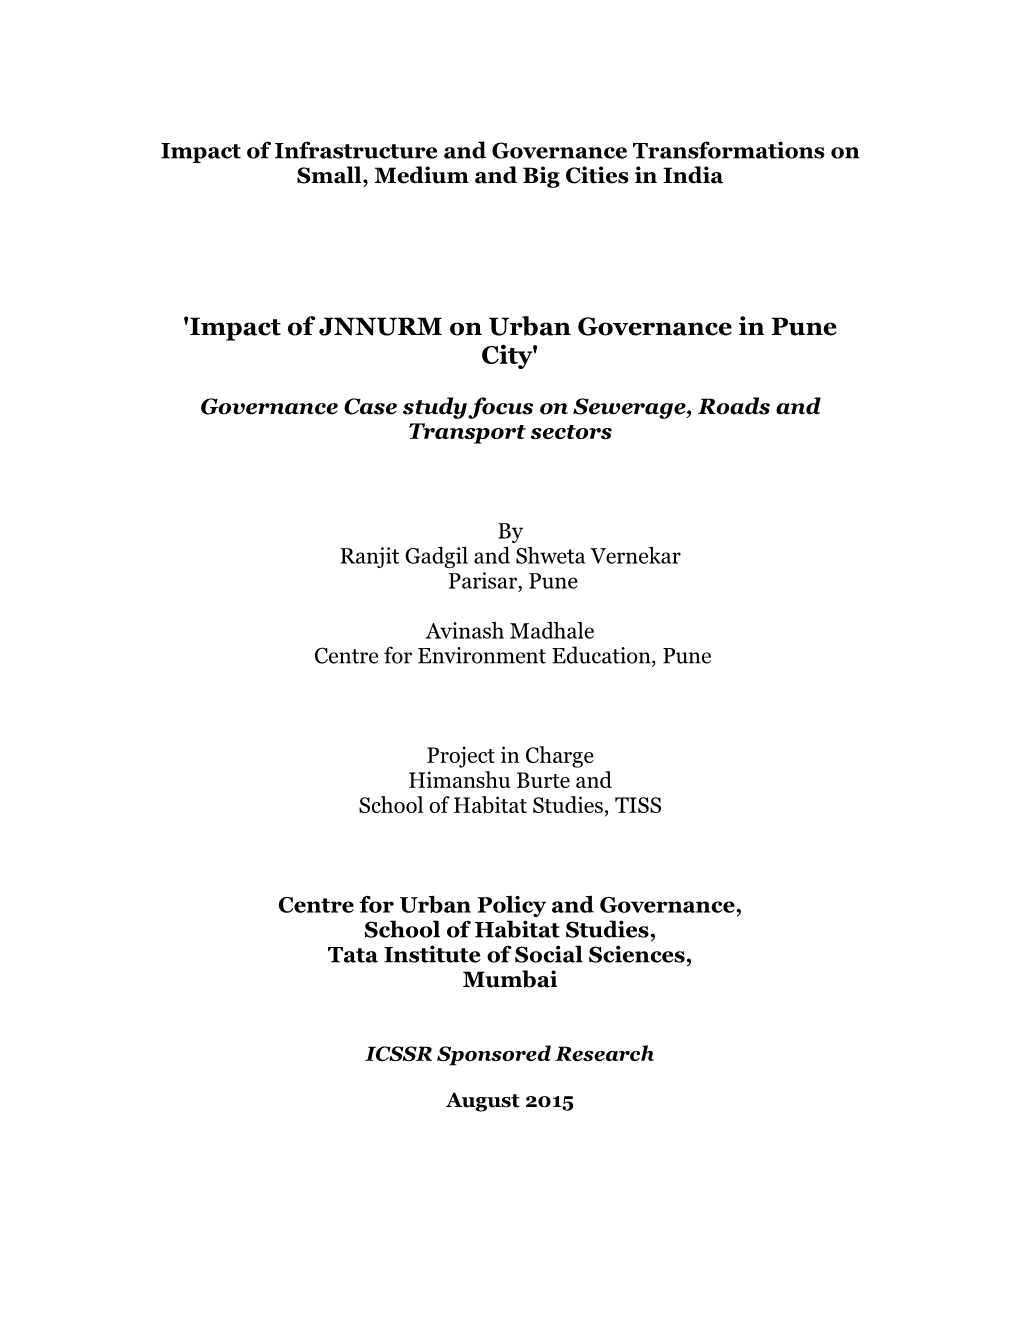 'Impact of JNNURM on Urban Governance in Pune City'